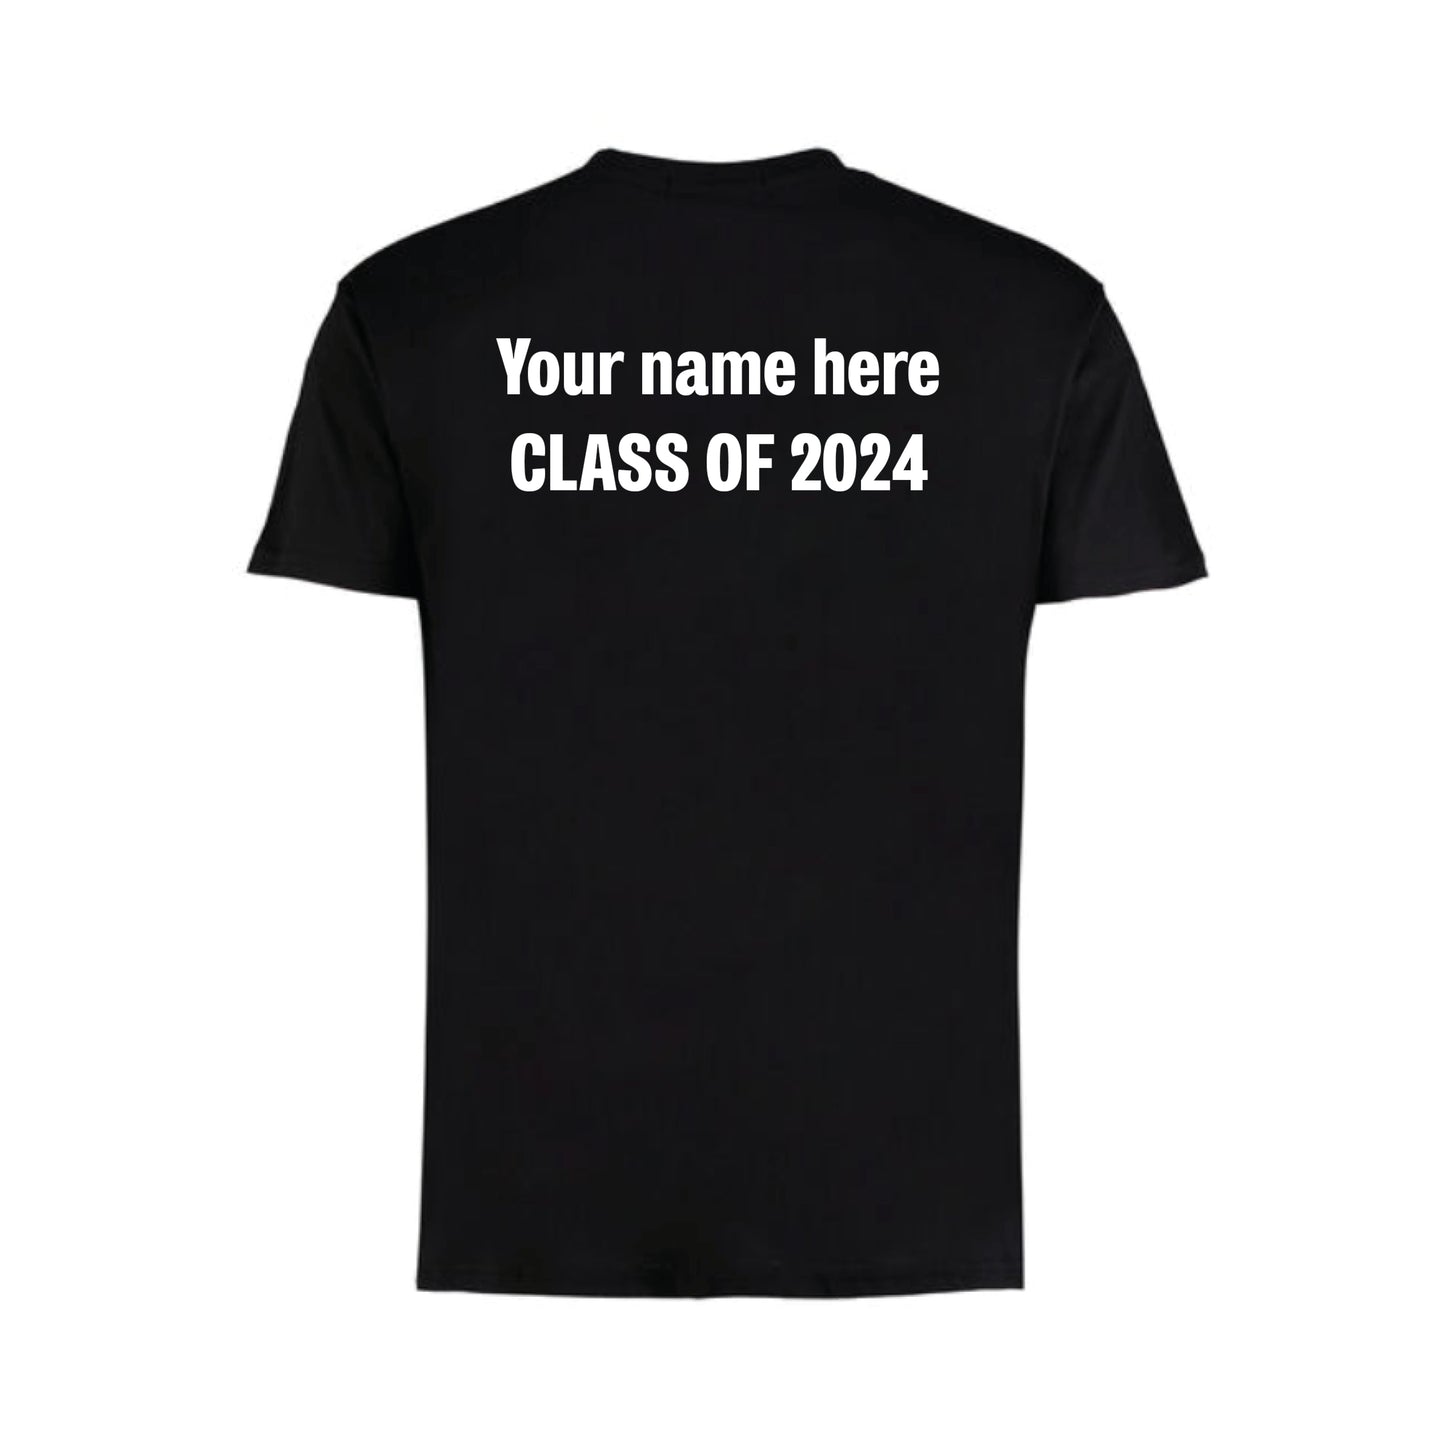 University of York personalised 2024 Graduation t-shirt